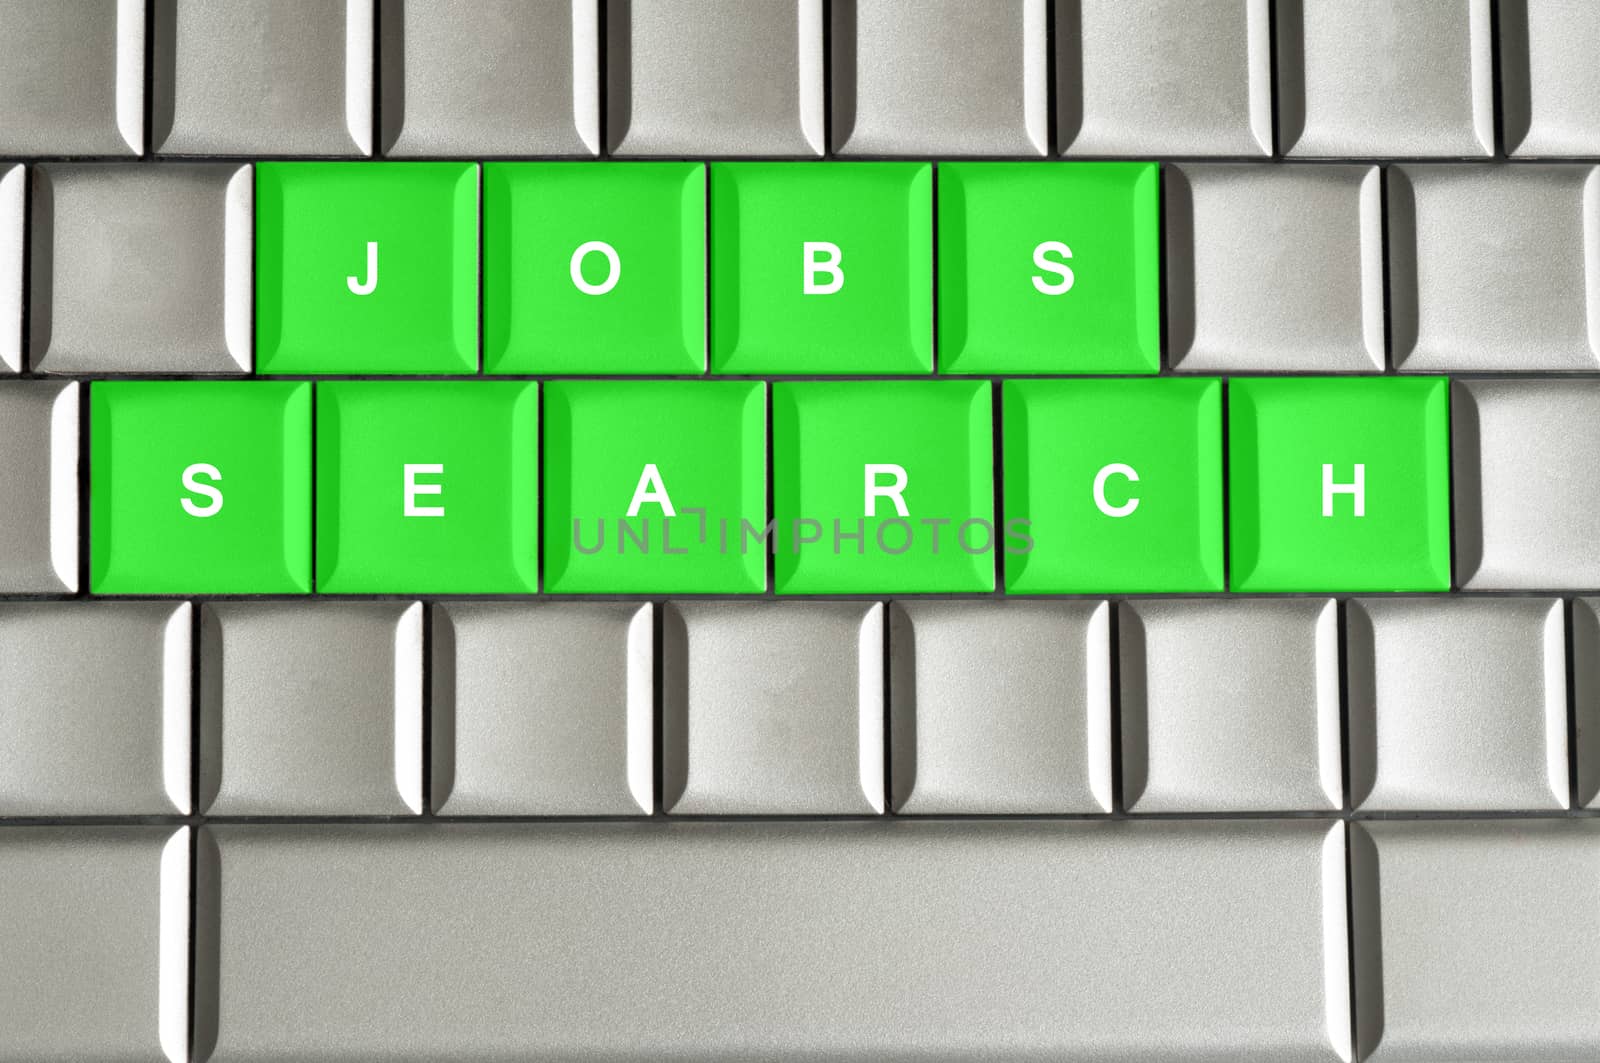 Jobs search spelled on a silver metallic keyboard